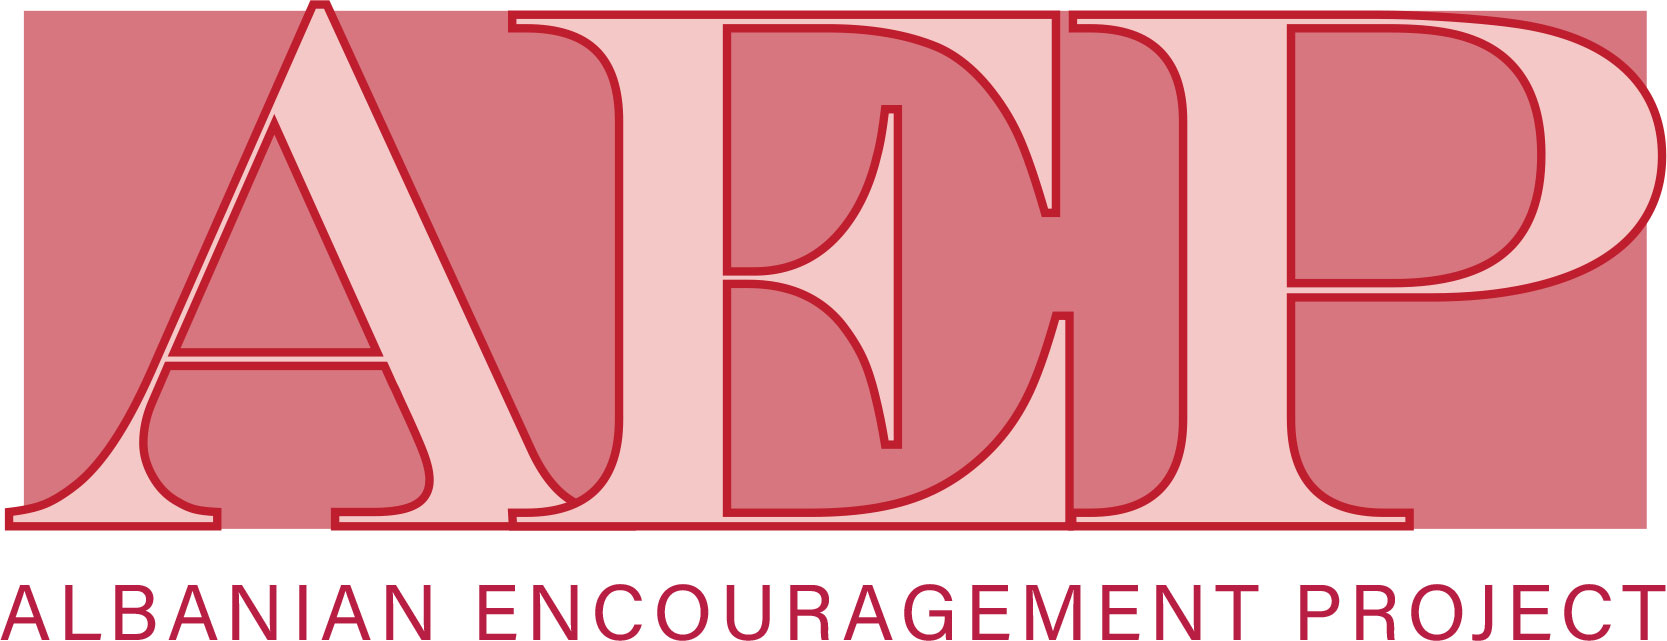 Albanian Encouragement Project (logo)